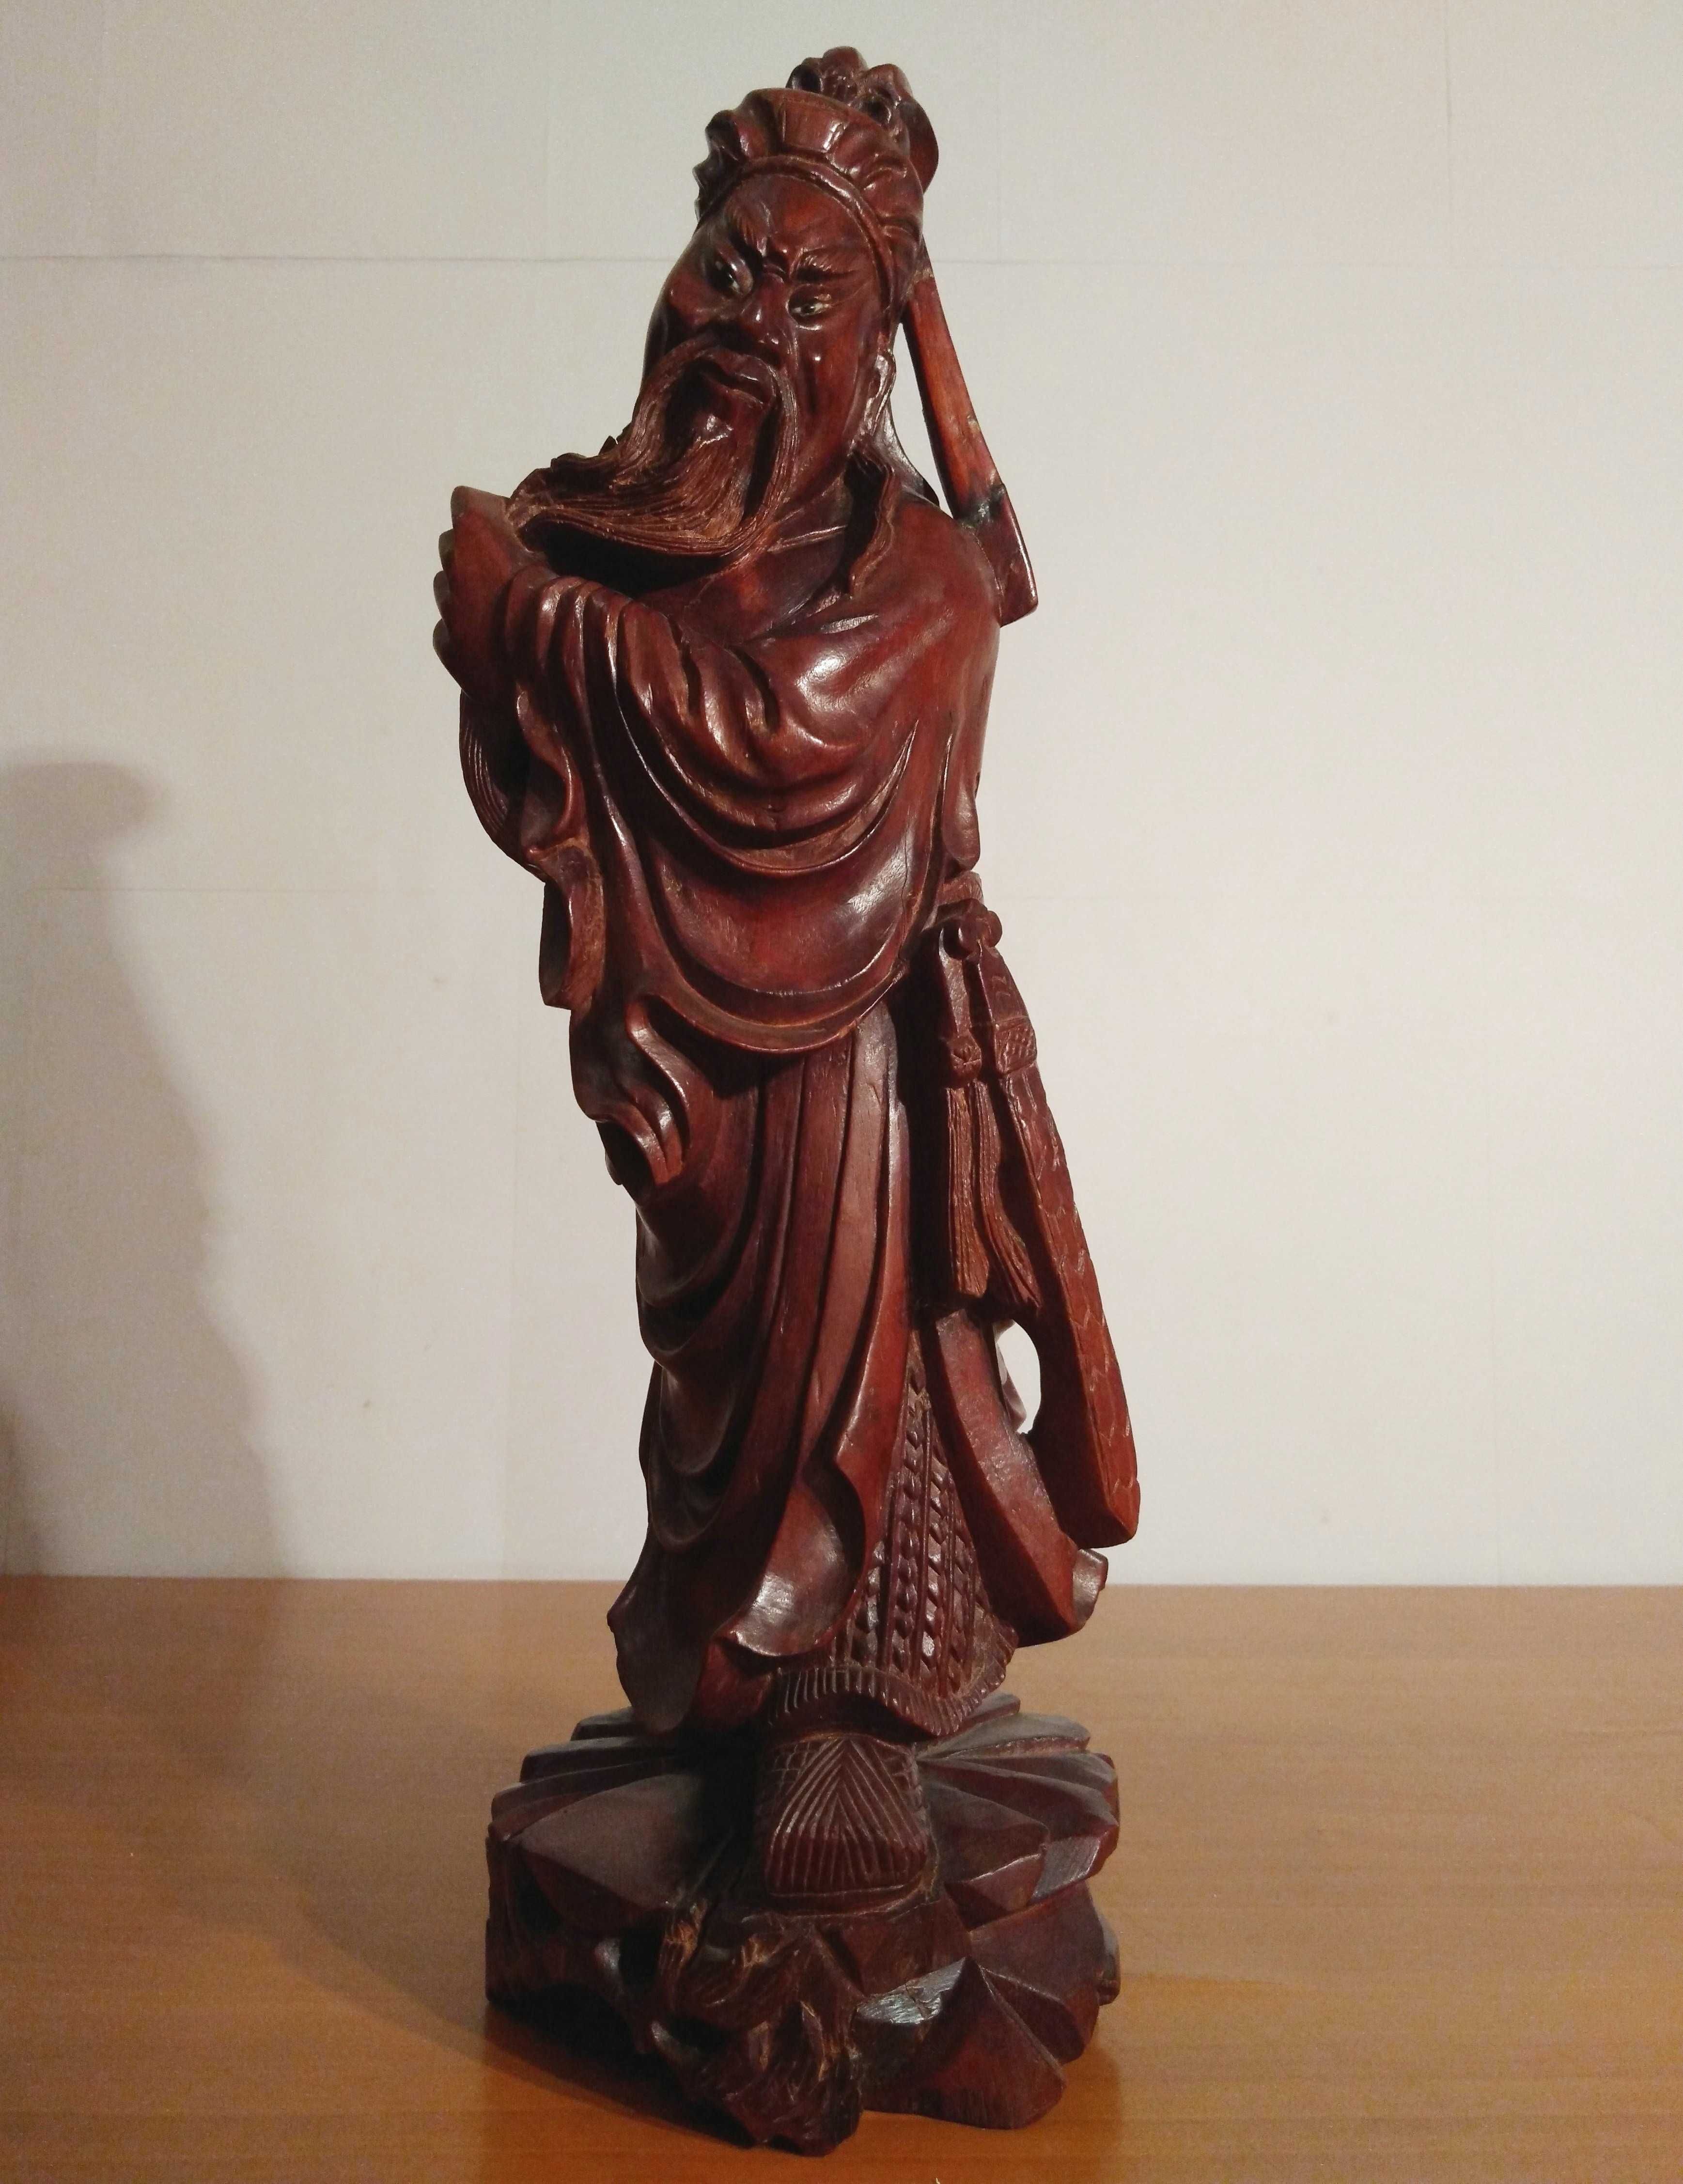 Statueta asiatica Feng Shui, protectie afaceri|Guan Yu sculptat| veche